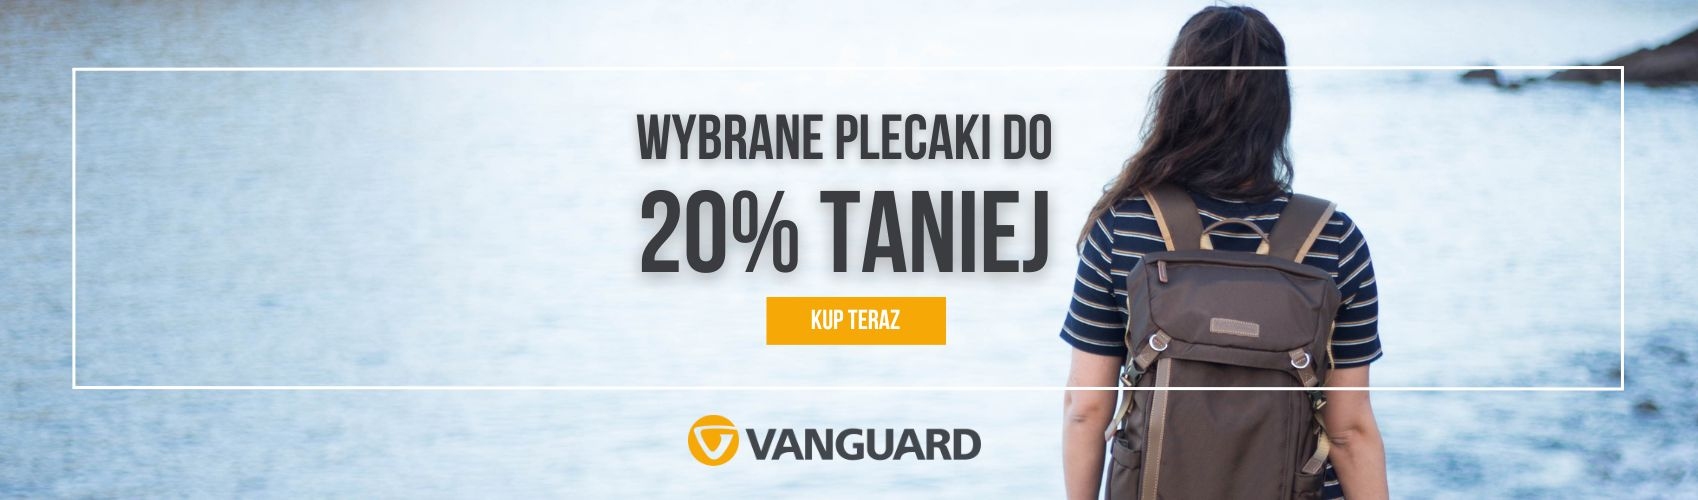 Kup teraz wybrane plecaki marki Vanguard z rabatem do 20%! 